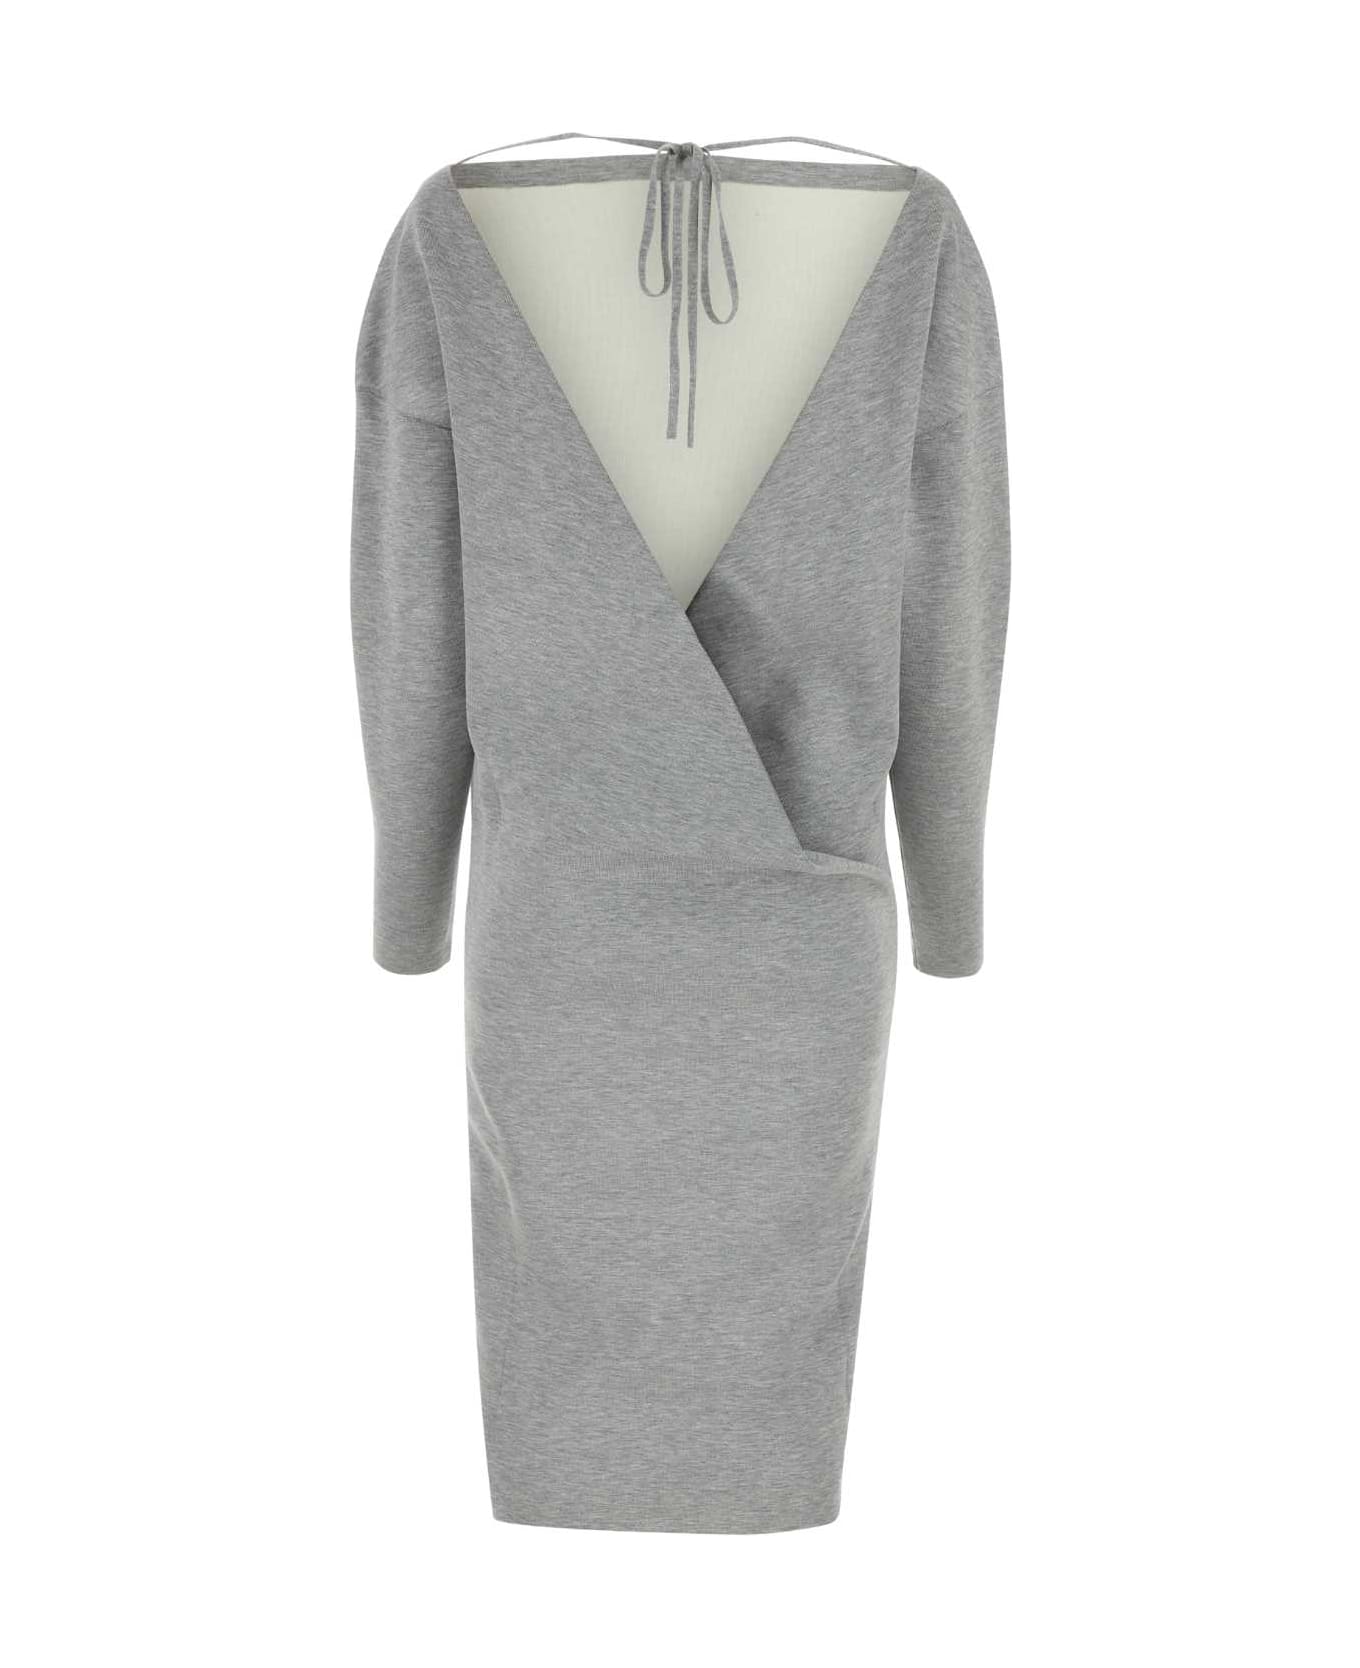 Gucci Grey Stretch Wool Blend Dress - LIGHTGREYMELANGE